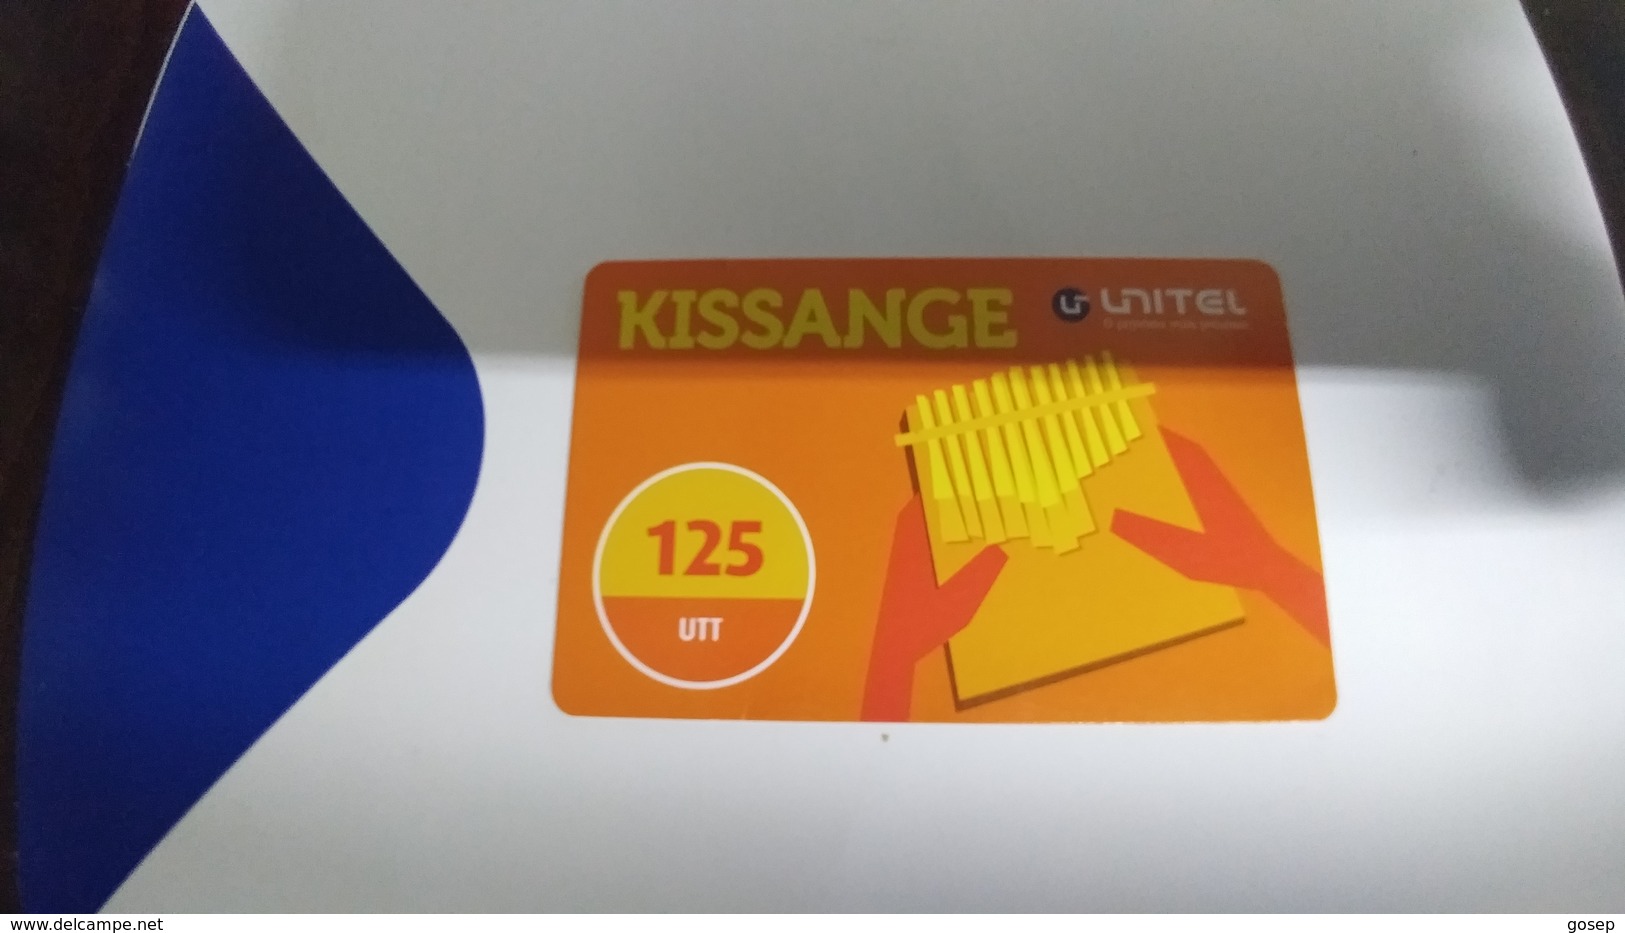 Angola-kissange-(26)-(125utt)-31.12.2016used+1card Prepiad Free - Angola